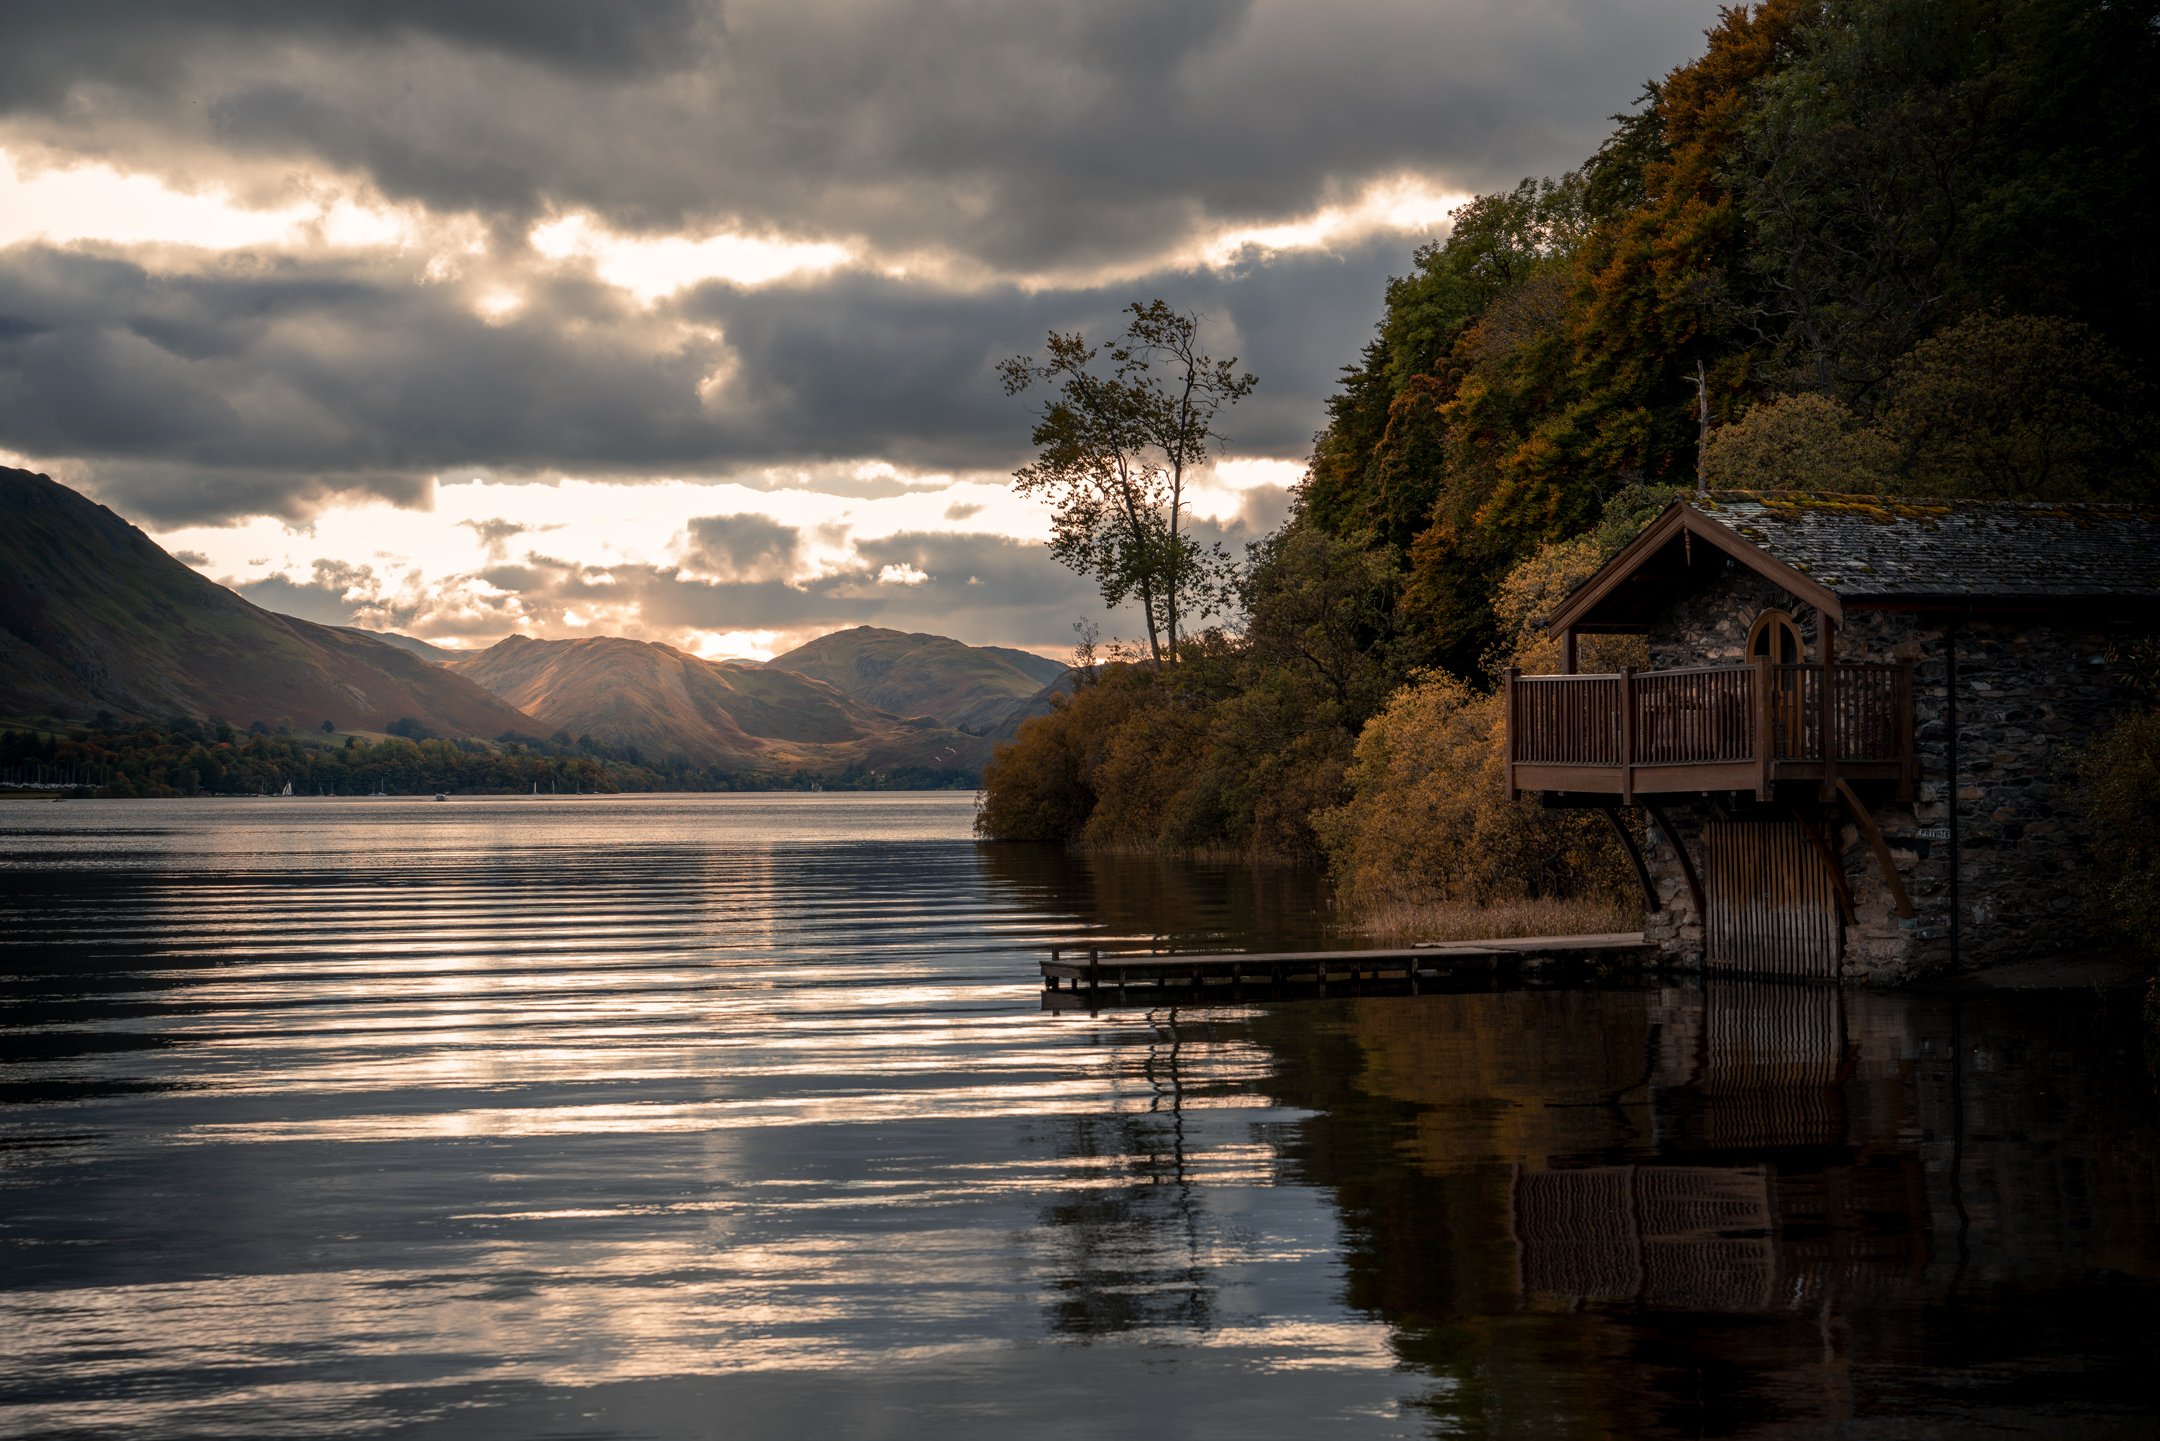 Lake District Photography Workshop & Tour